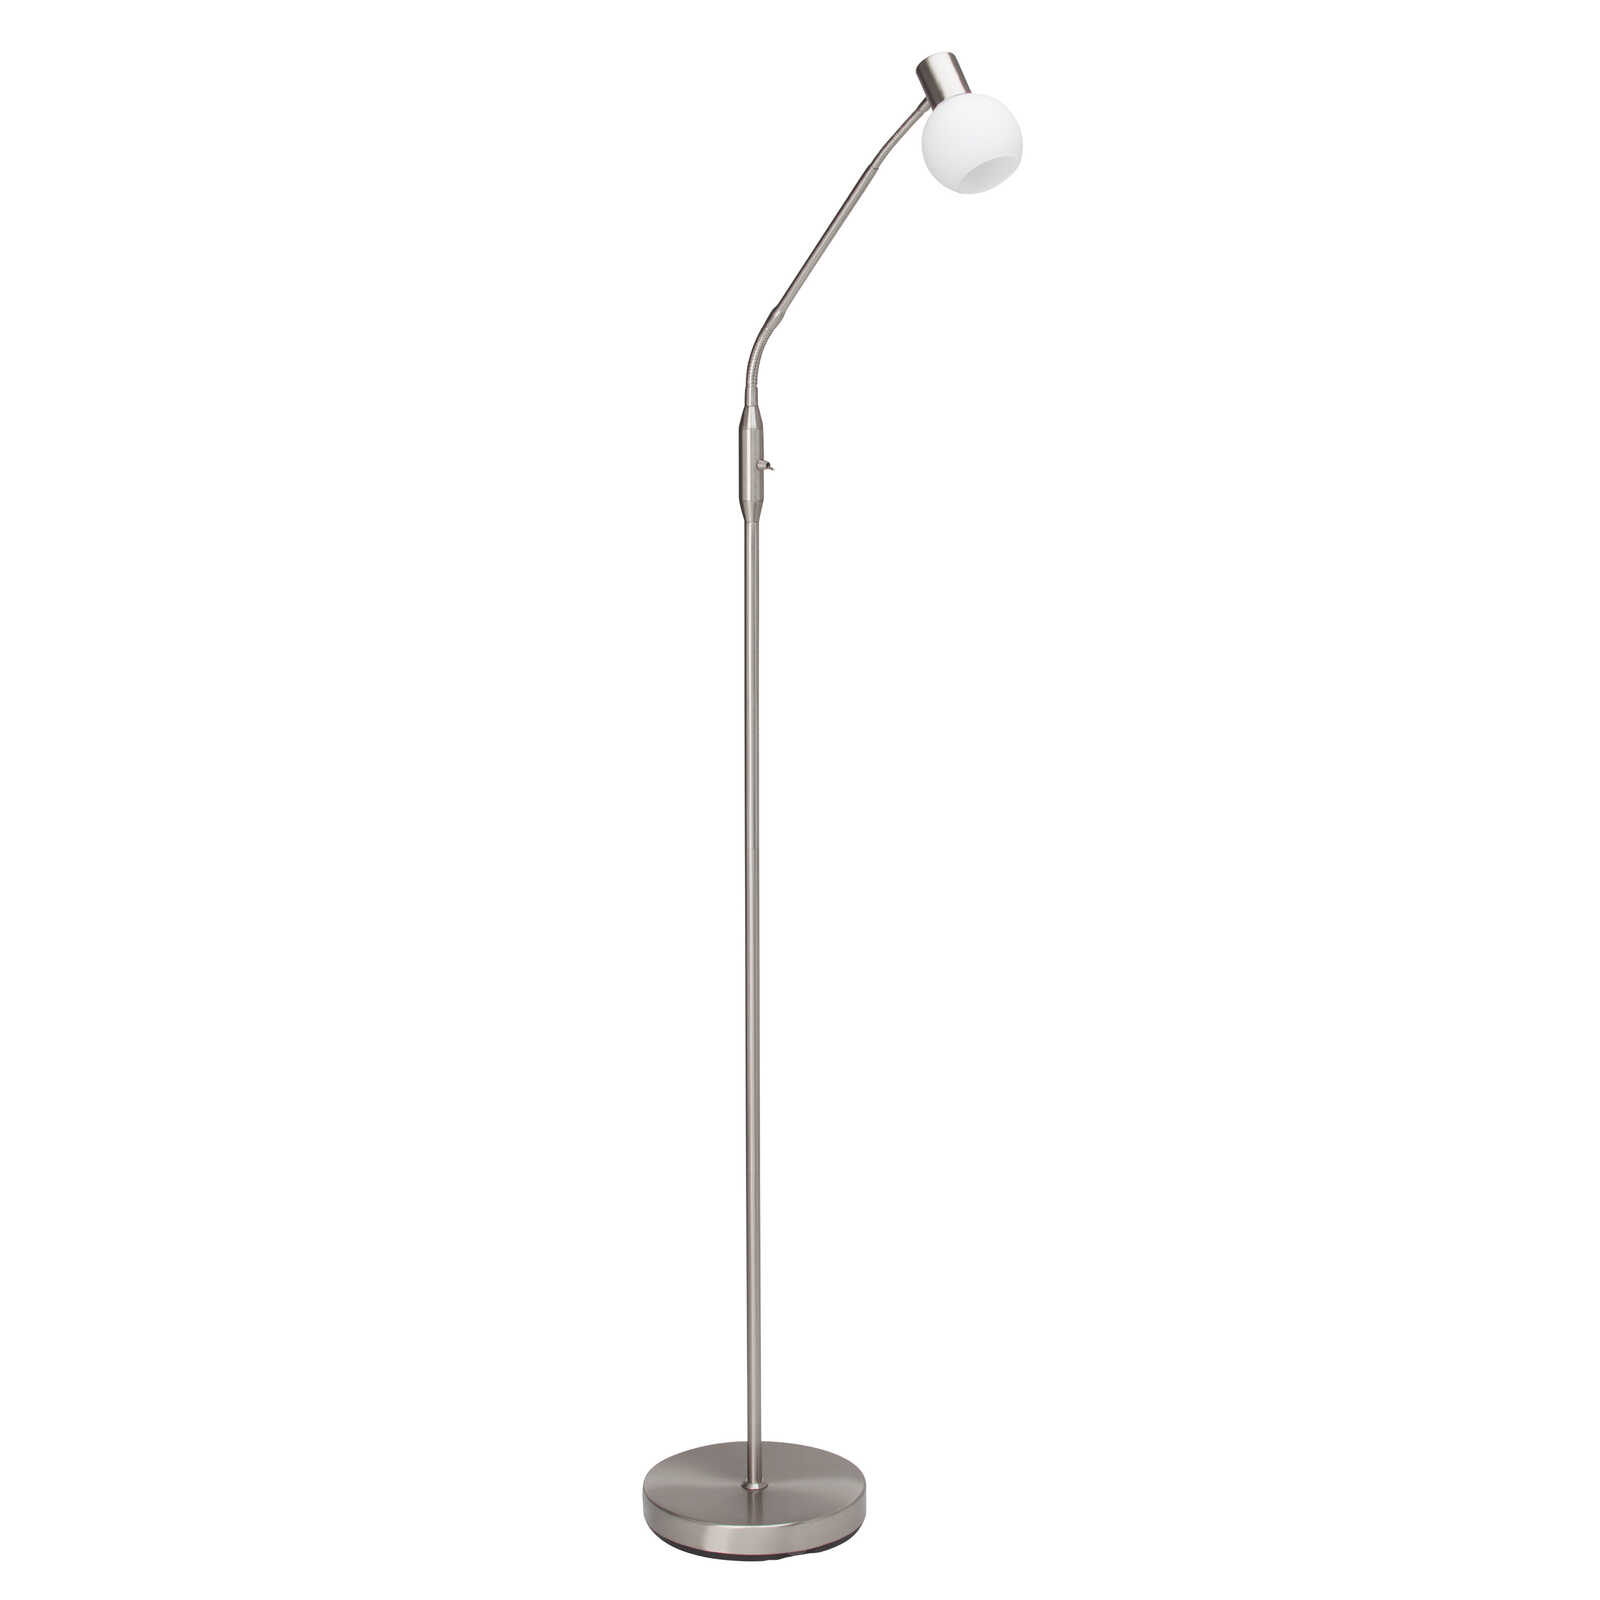             Glass floor lamp - Malou 1 - Metallic
        